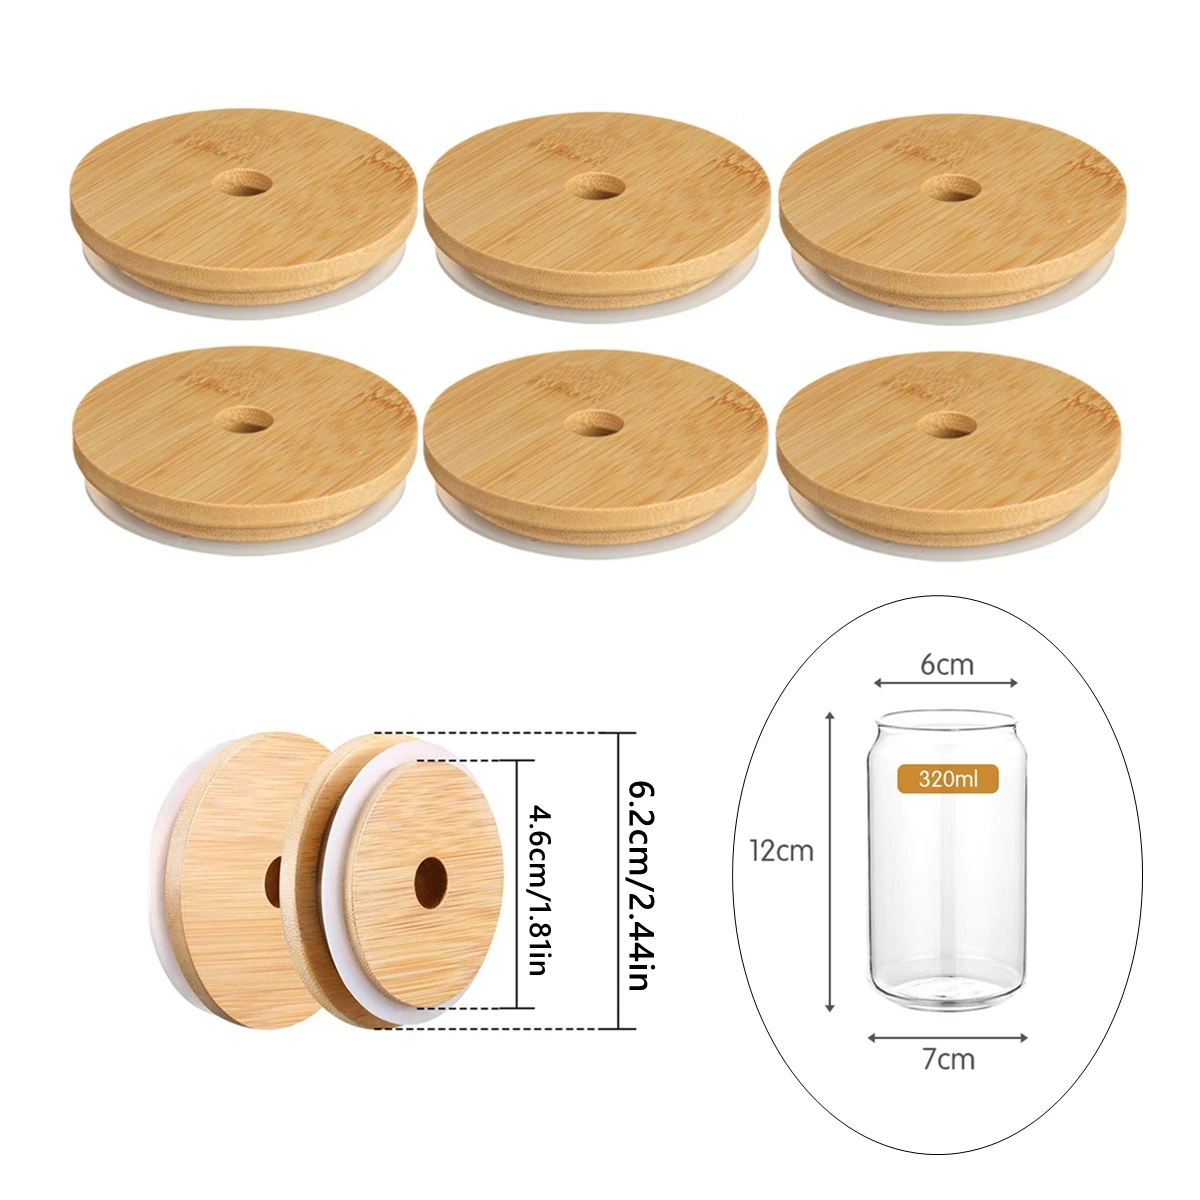 https://ae01.alicdn.com/kf/Saba219b61b7b41509350069186cdcb0fJ/8Pcs-62-68-70-86mm-Bamboo-Lids-for-Mason-Jars-Wooden-Jar-Lids-Reusable-Bamboo-Caps.jpg